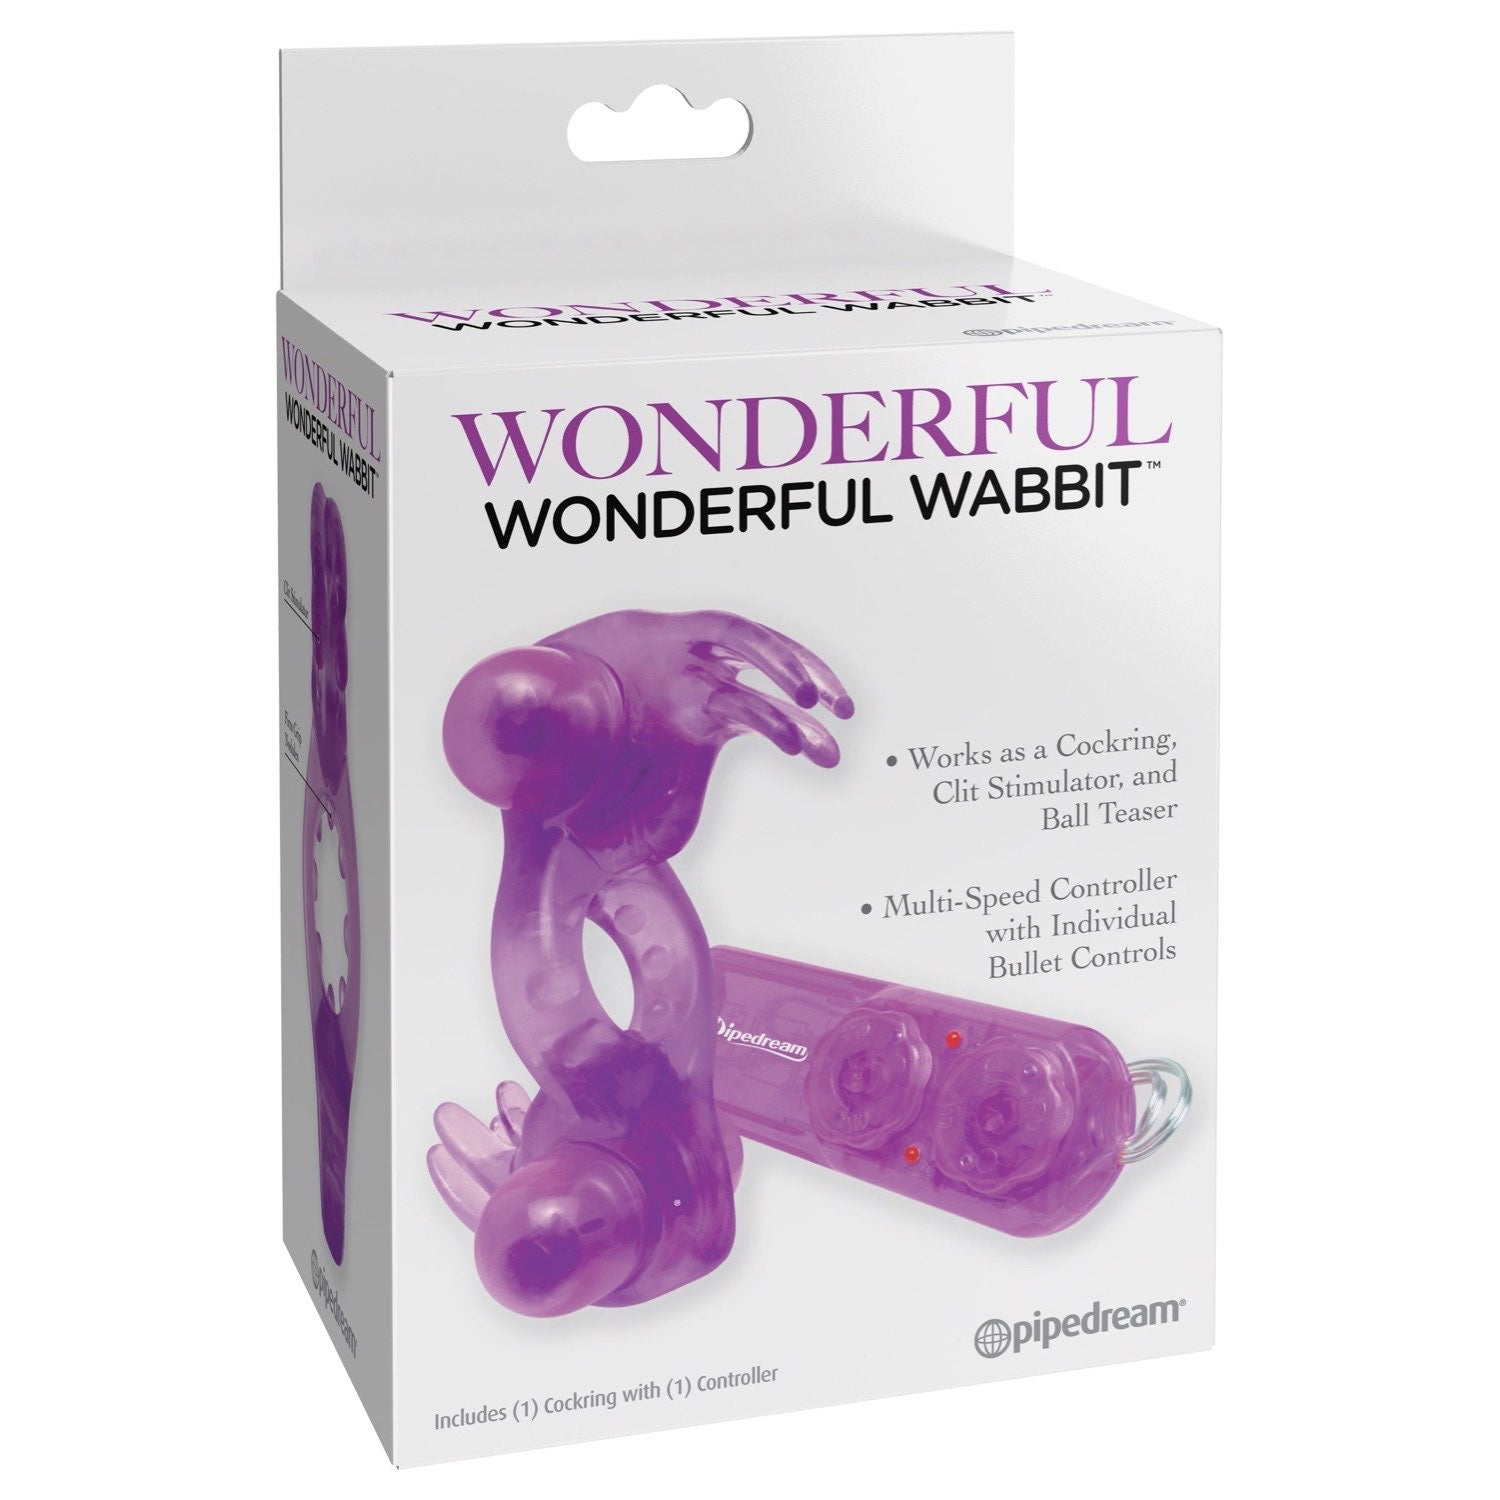  Wonderful Wonderful Wabbit - 紫色双振动阴茎环 by Pipedream